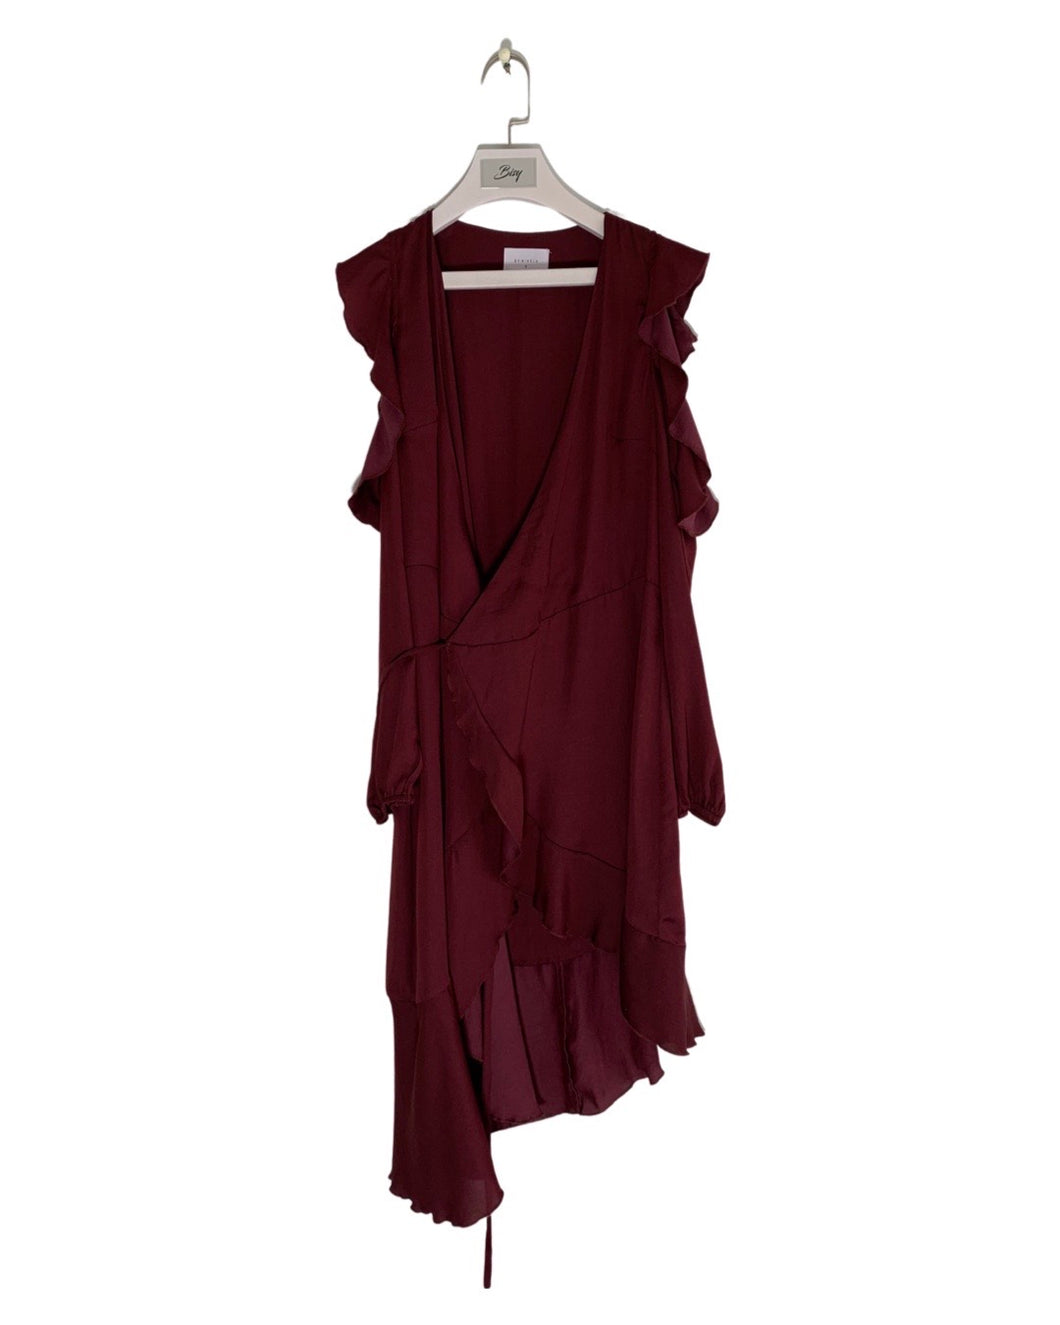 Long Sleeve Designer Dress in Burgundy<br />Preloved